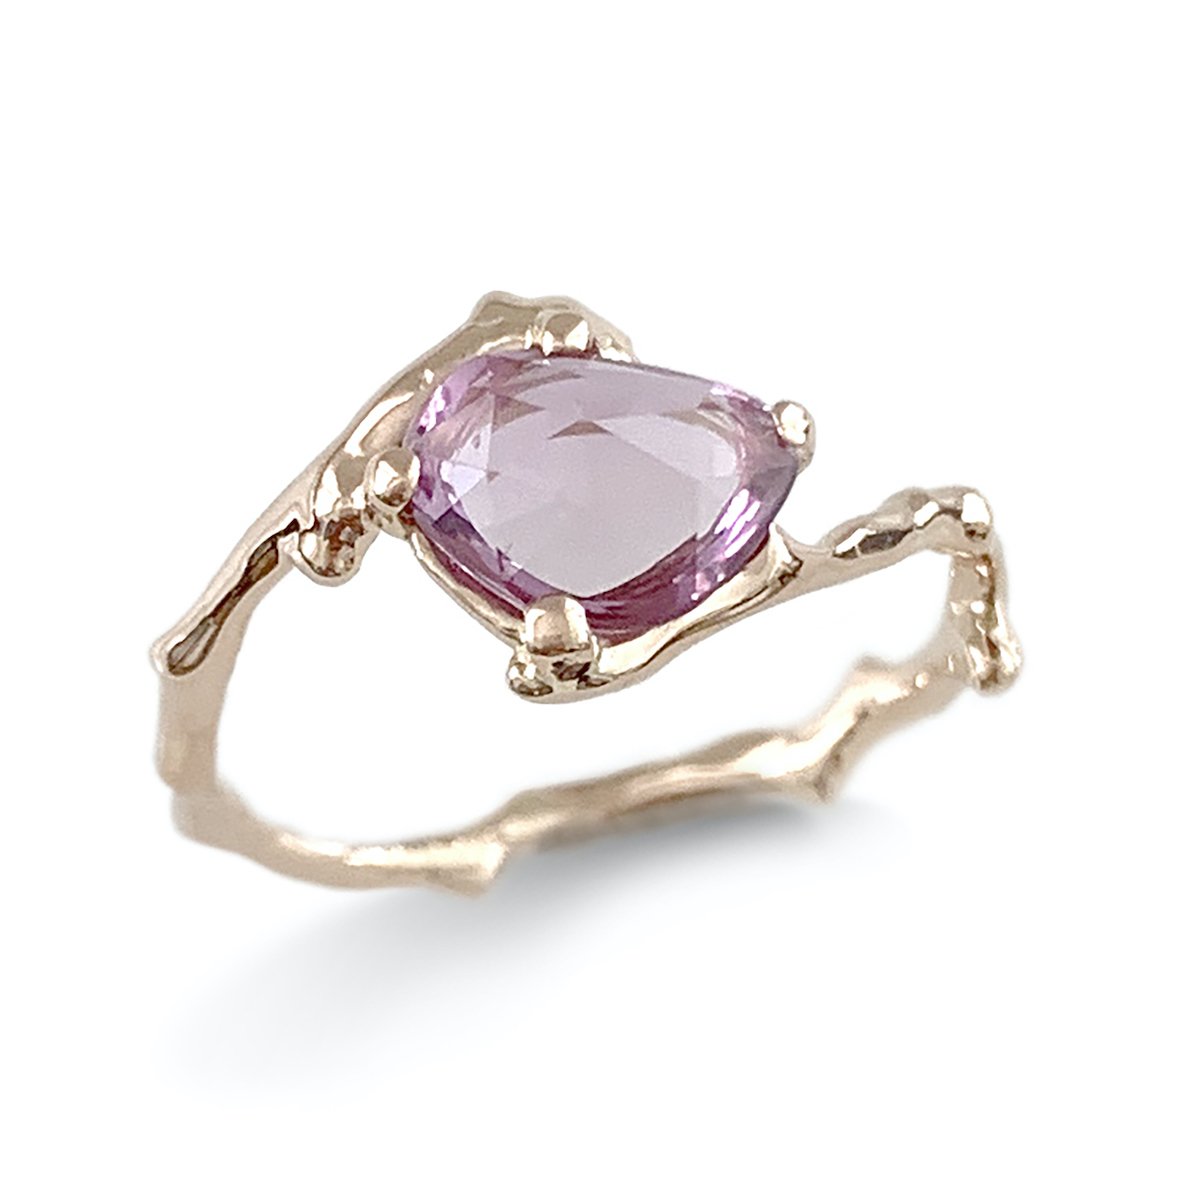 Brandts Jewellery cherry twig ring with rose cut ceylon sapphire - Ayshe Brandts.jpg